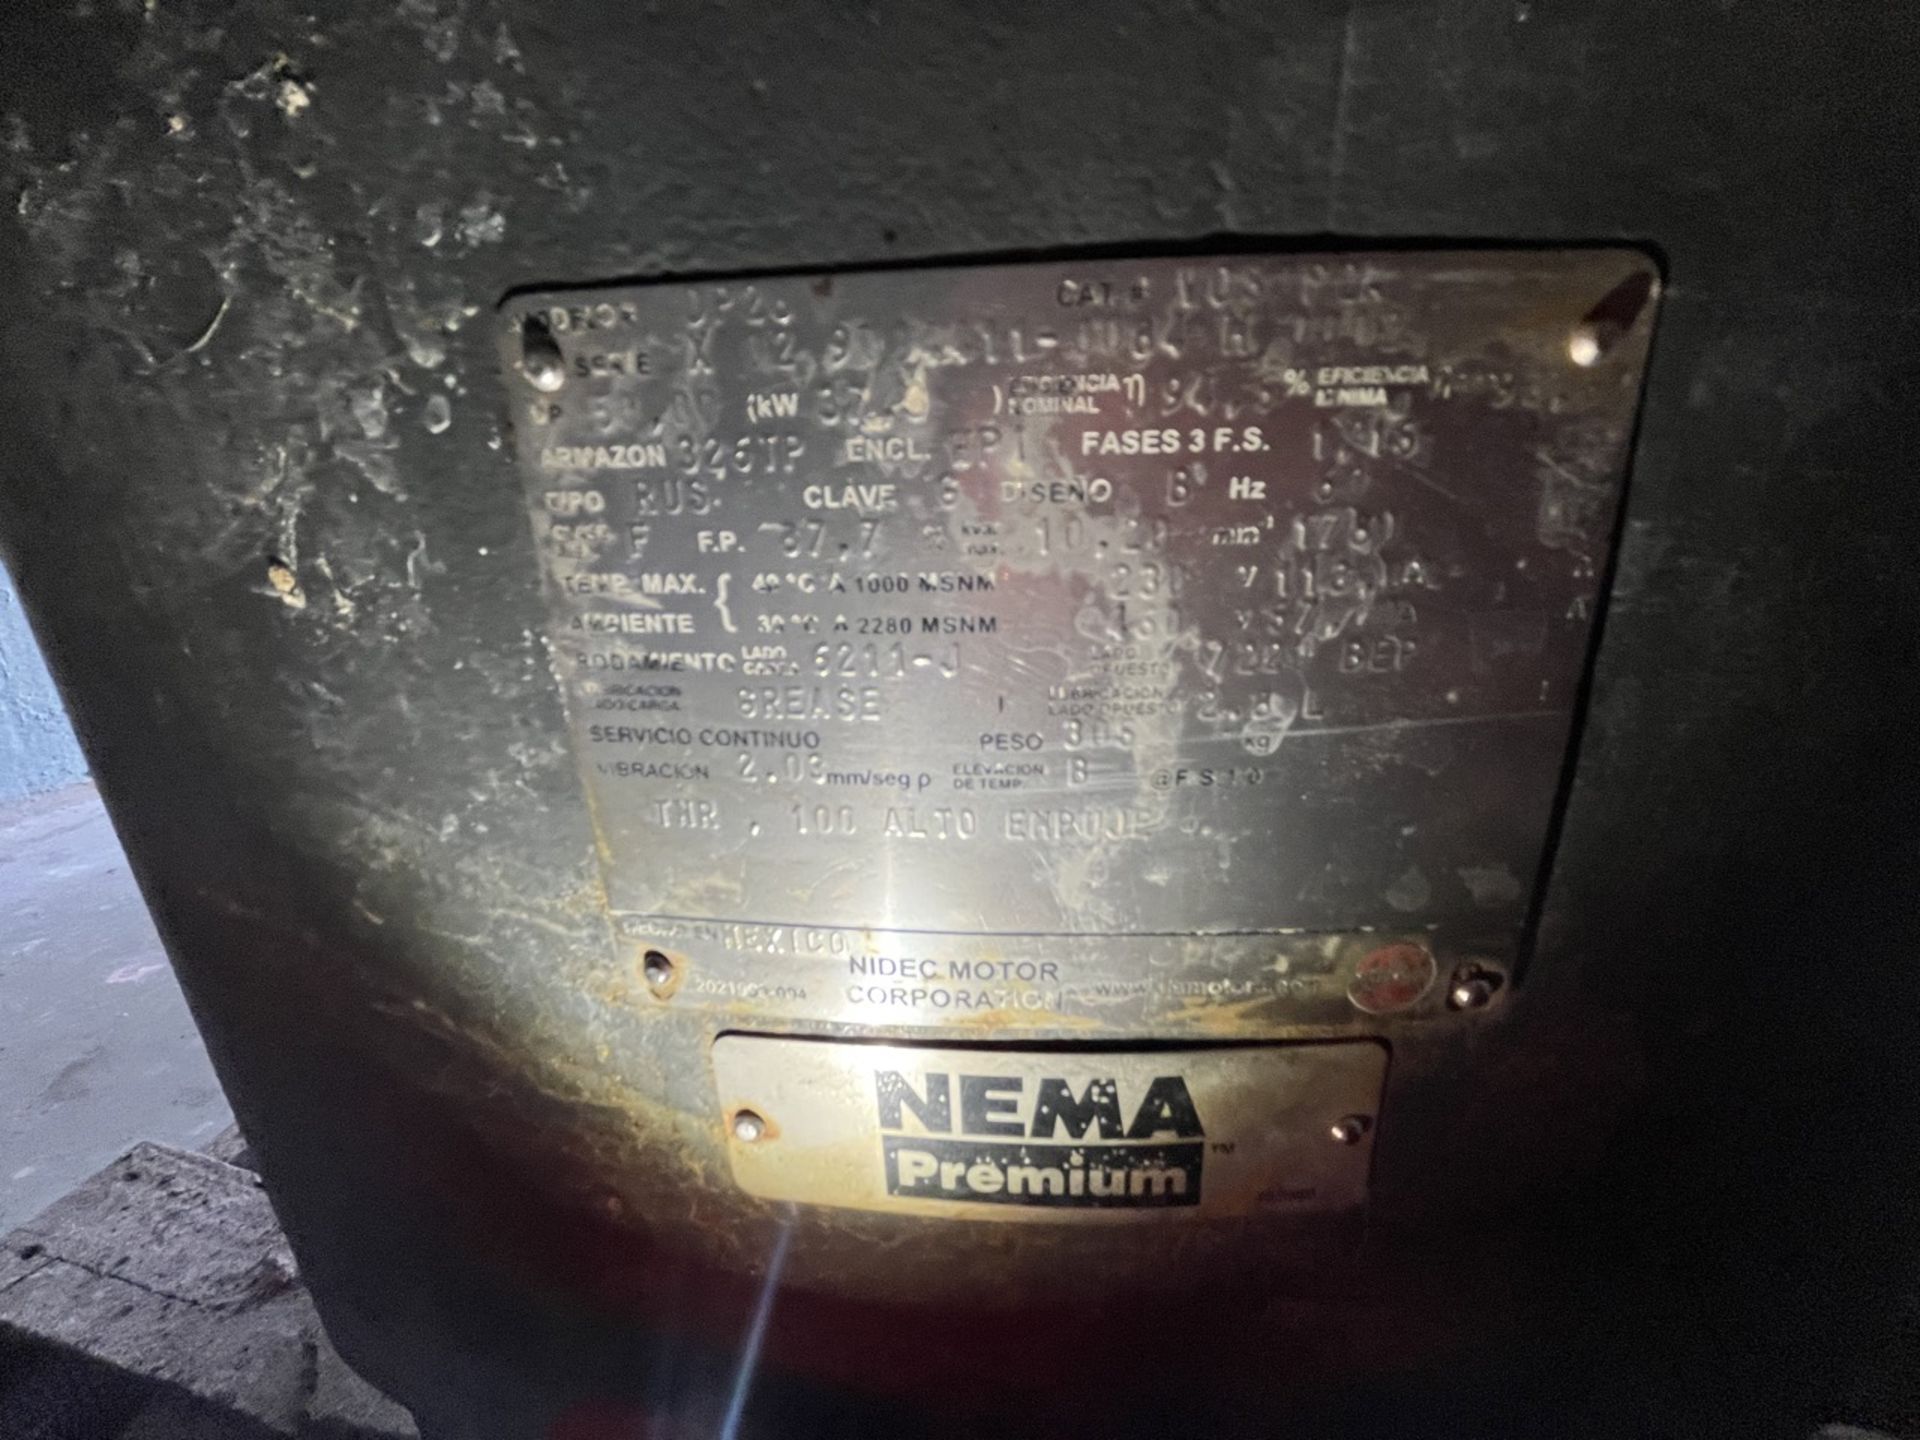 Nema vertical motor for well pump, Model DP28, Series X 02 9004411, 50 hp capacity. / Motor vertic - Image 10 of 12